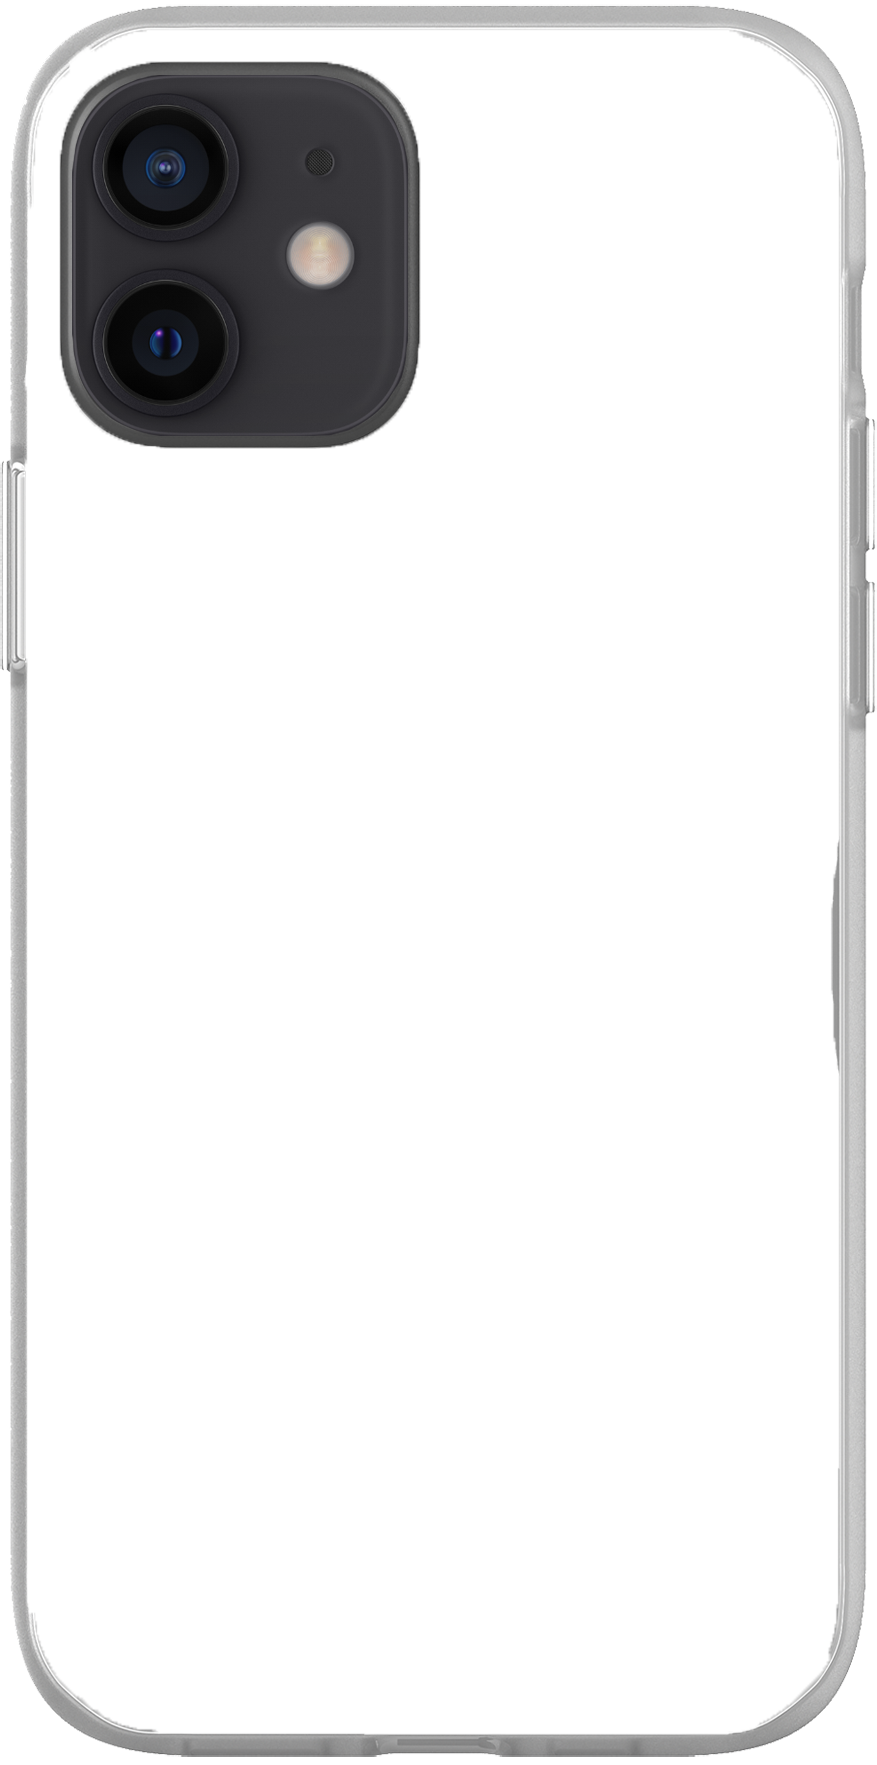 Iphone 12 flexicase overlay